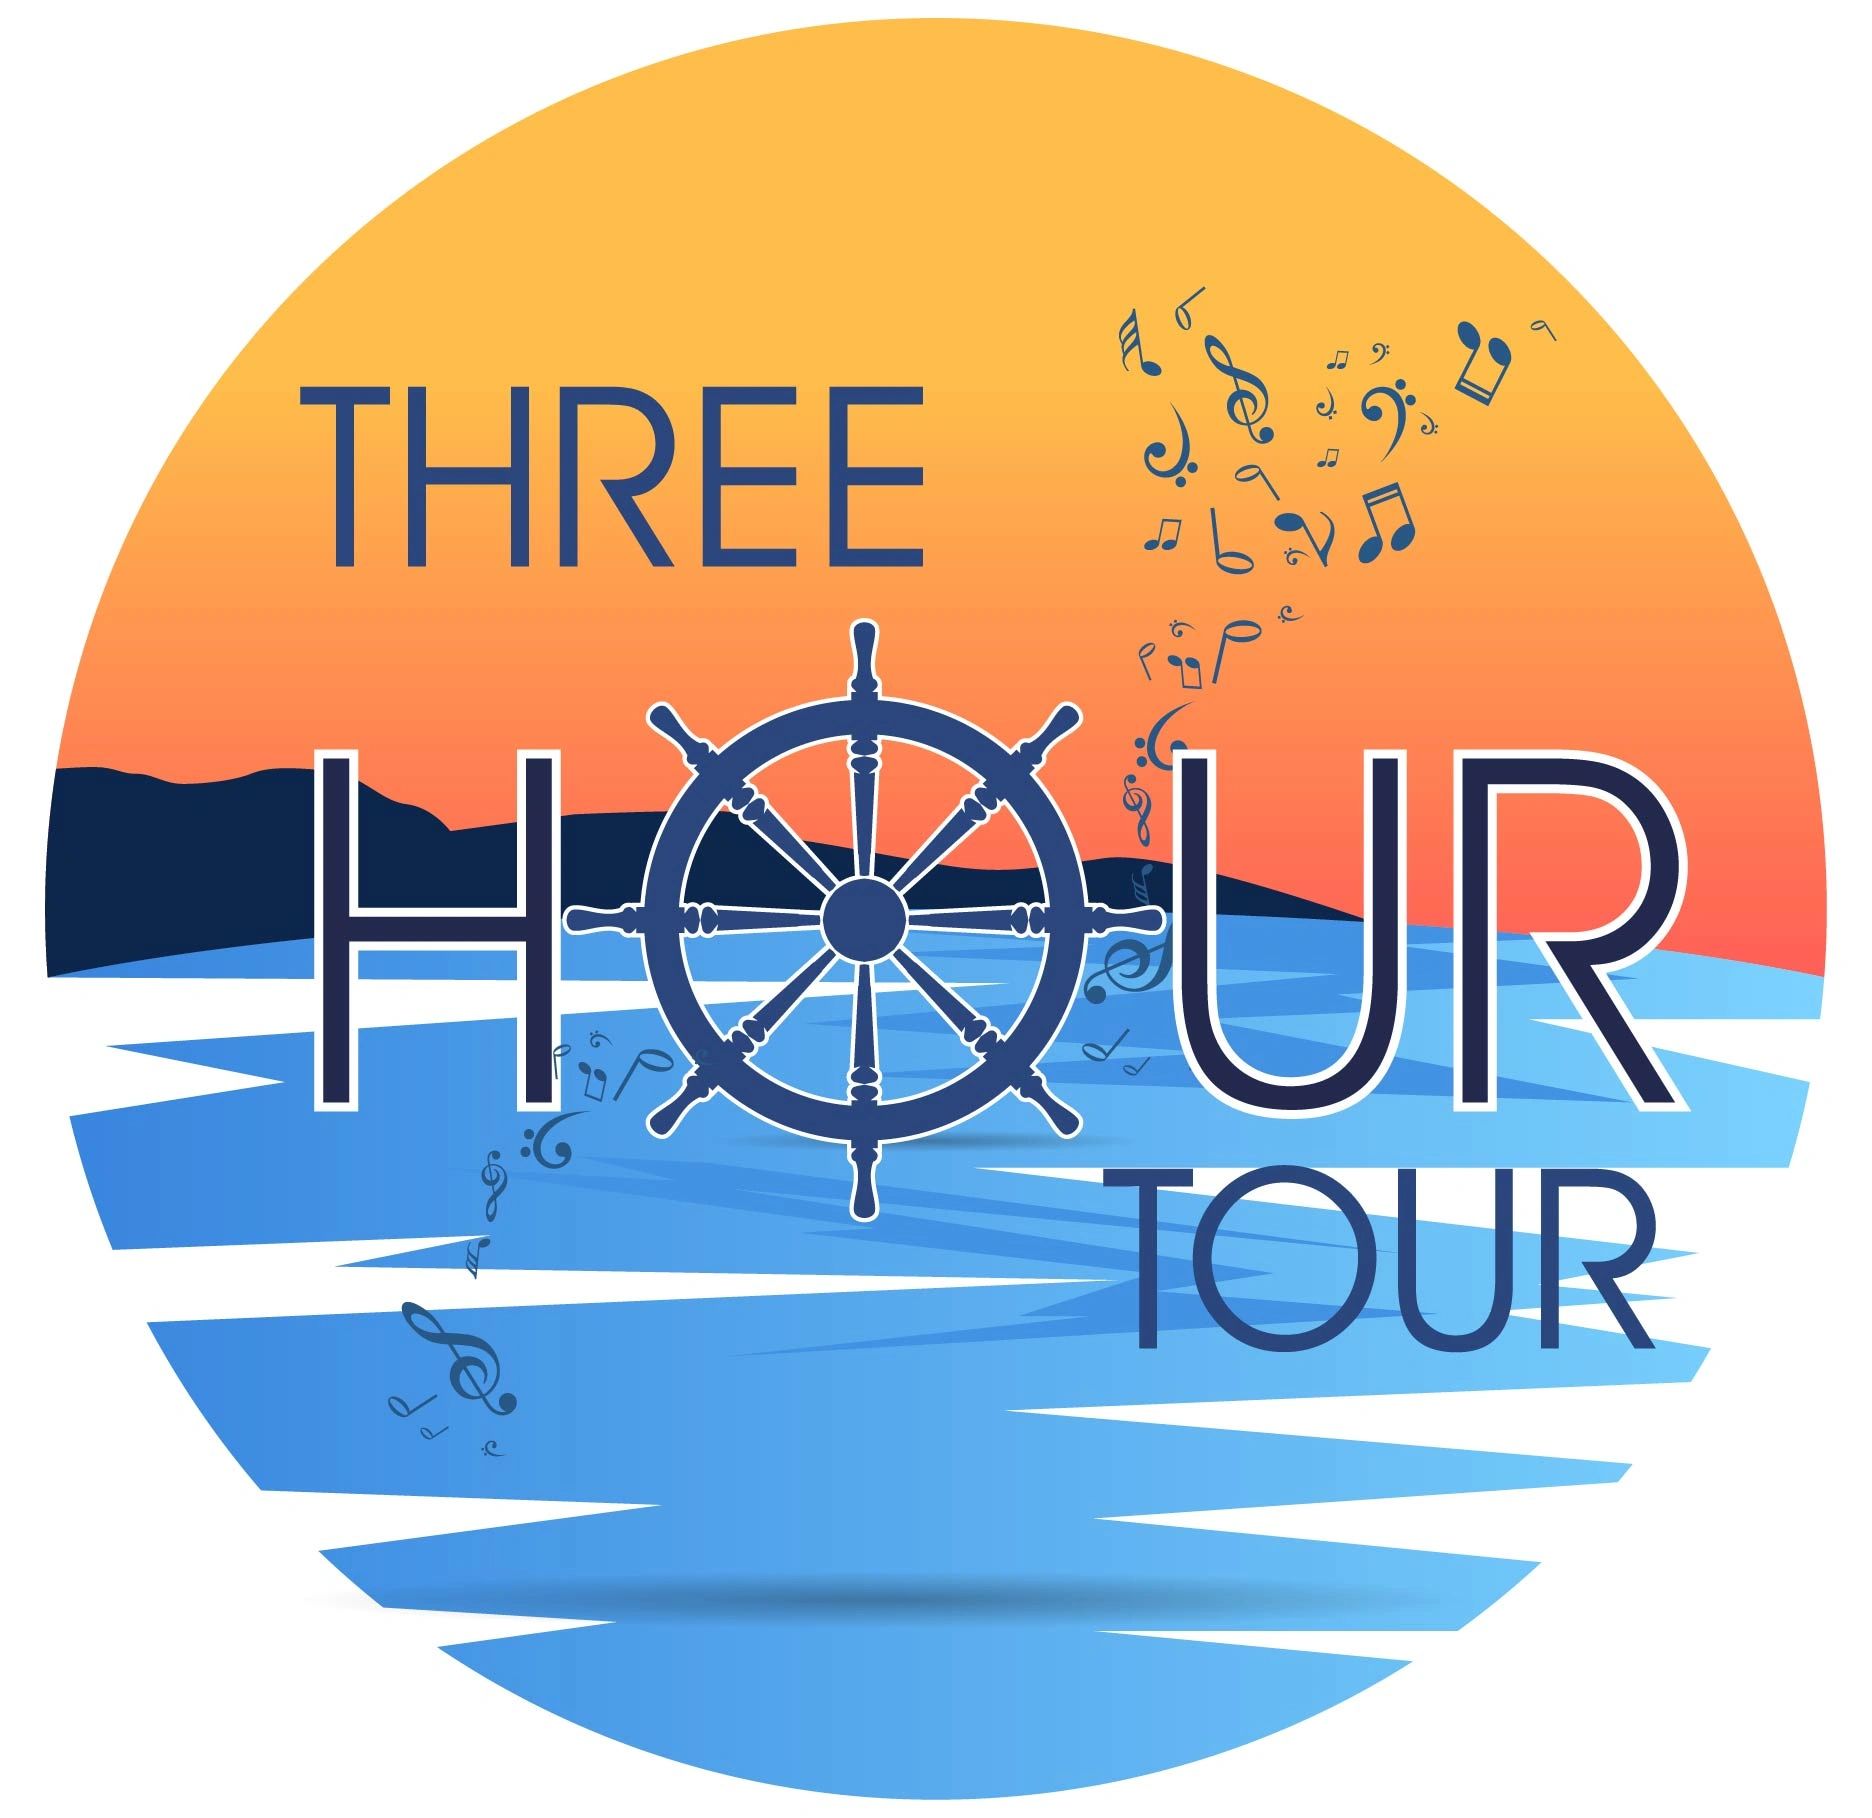 the three hour tour